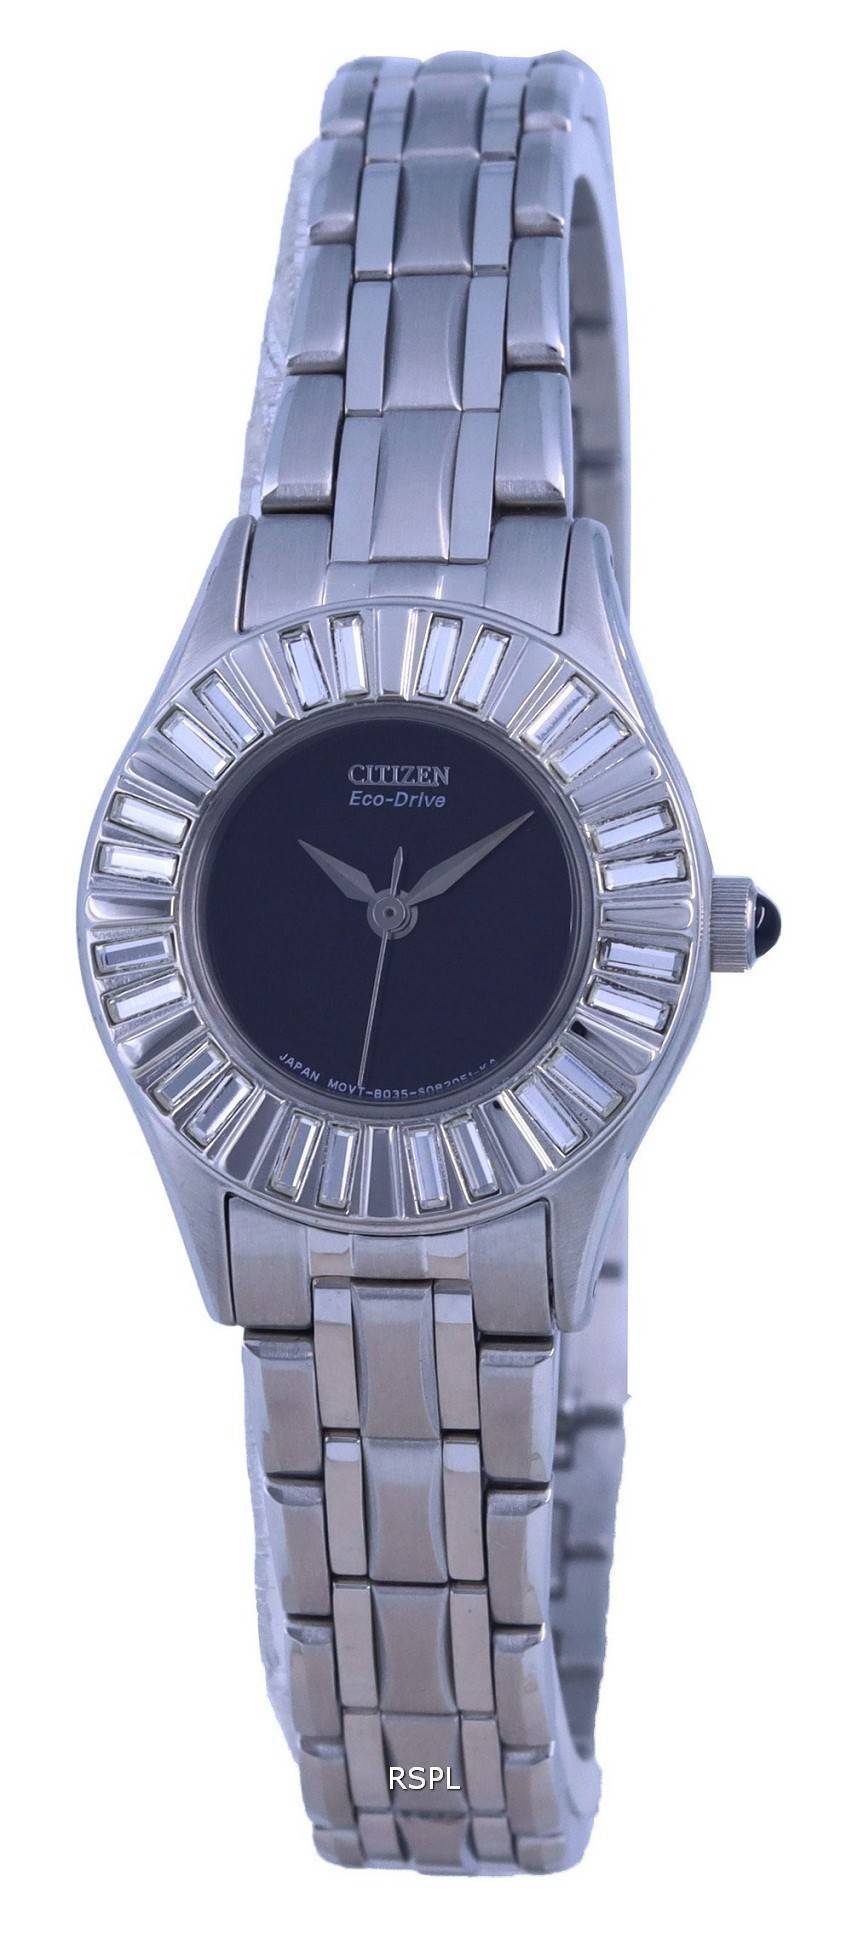 Citizen Crystal Collection Eco-Drive EW5375-57E Women's Watch